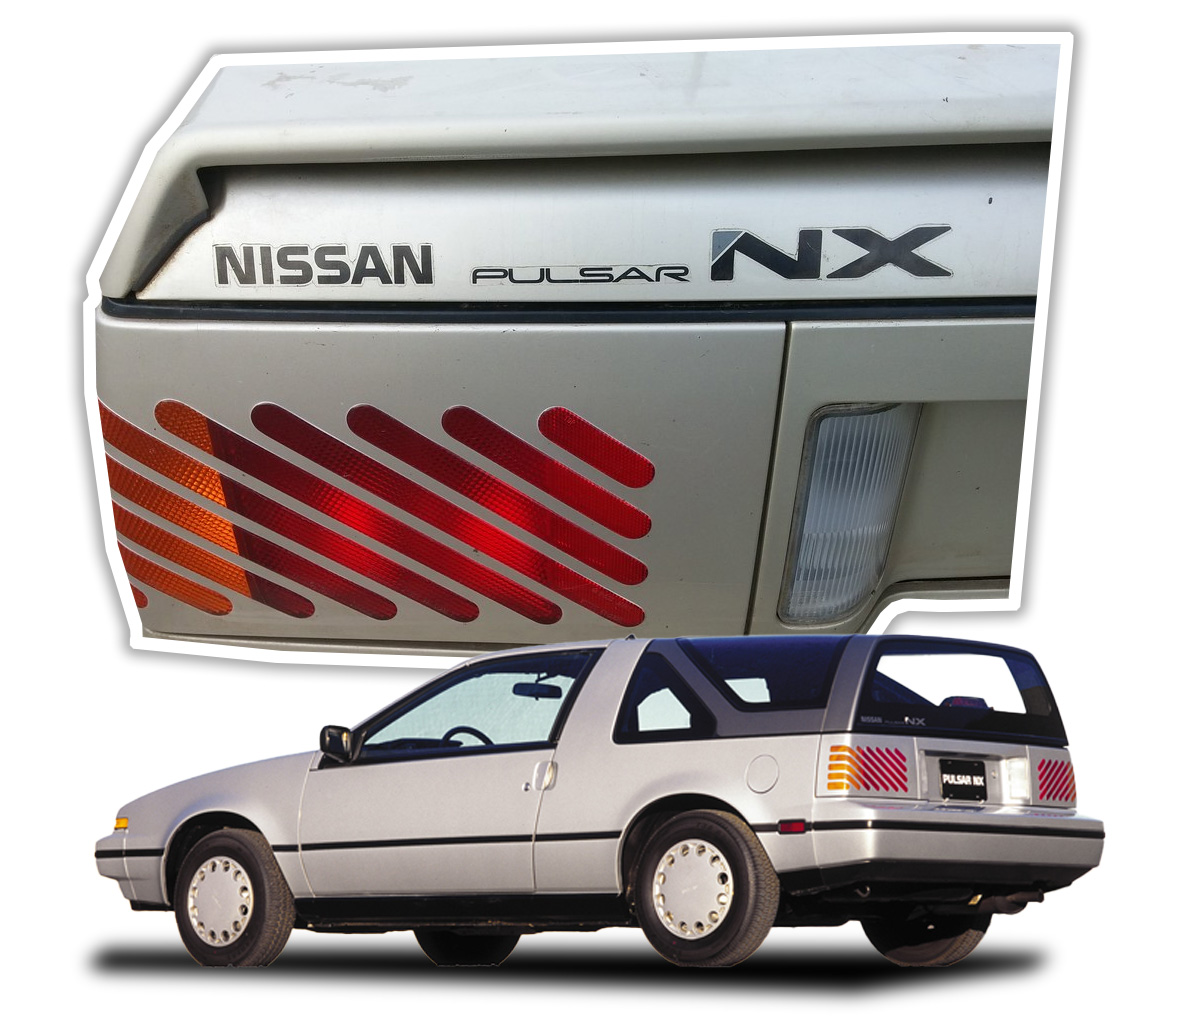 Nissan Pulsarnx